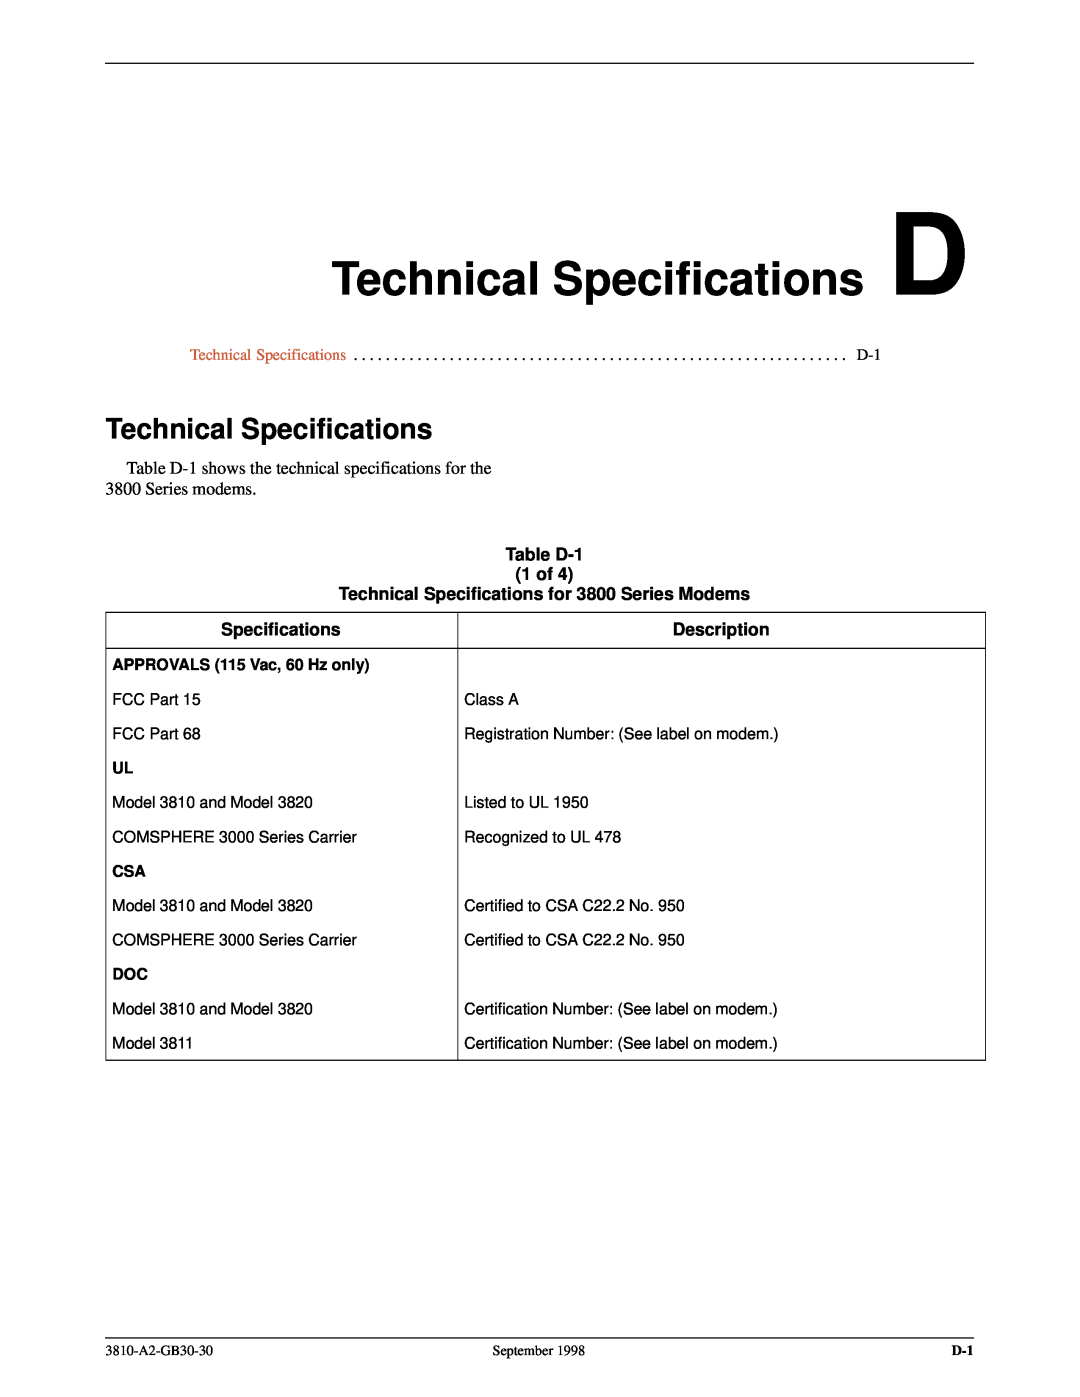 Paradyne manual Technical Specifications D, Table D-1 1 of Technical Specifications for 3800 Series Modems, Description 